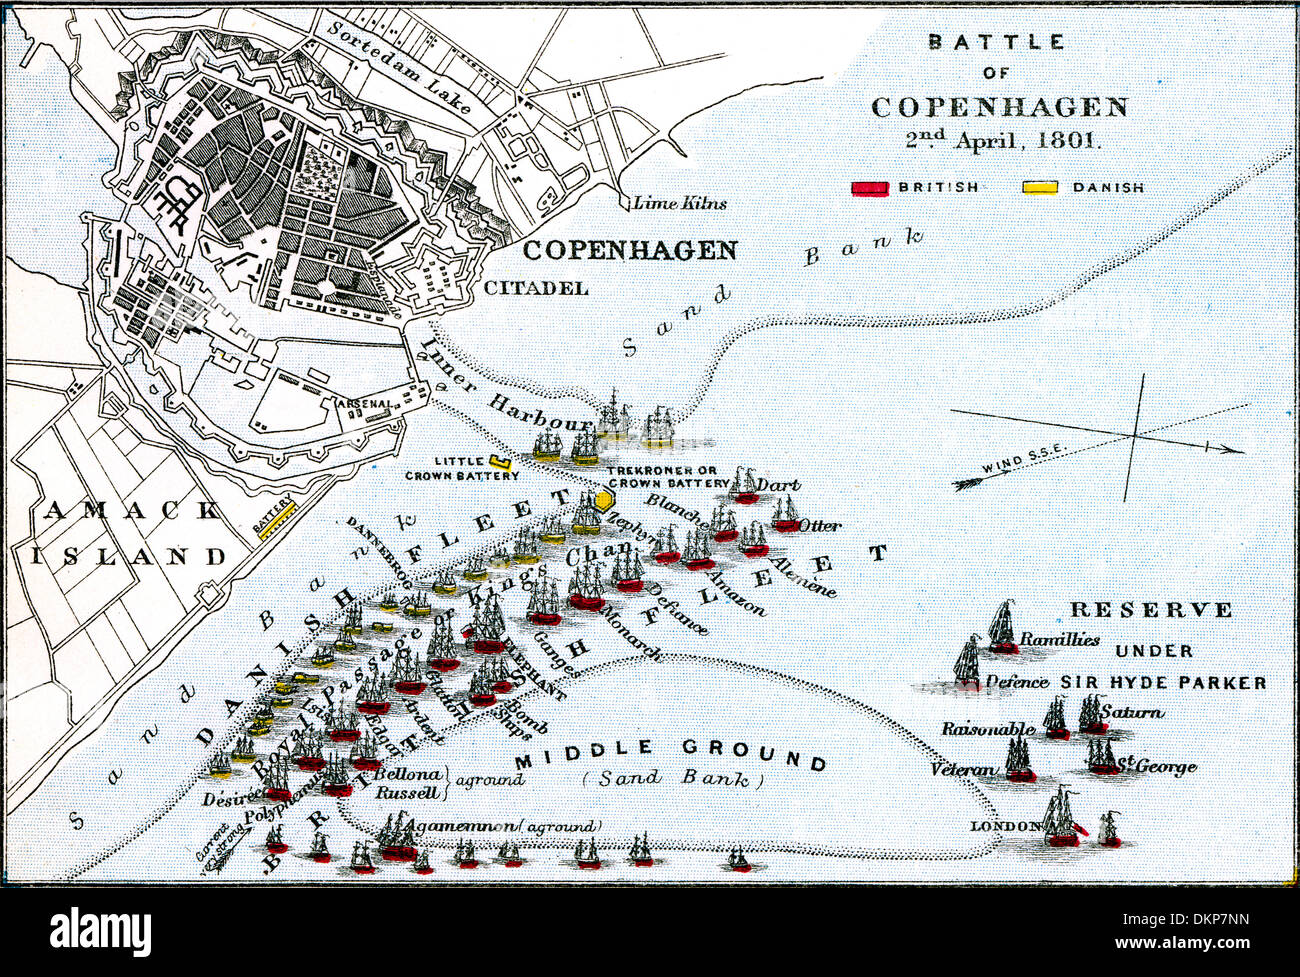 The Battle of Copenhagen 2nd April 1801. Map of battle plan. Published 1899. Stock Photo